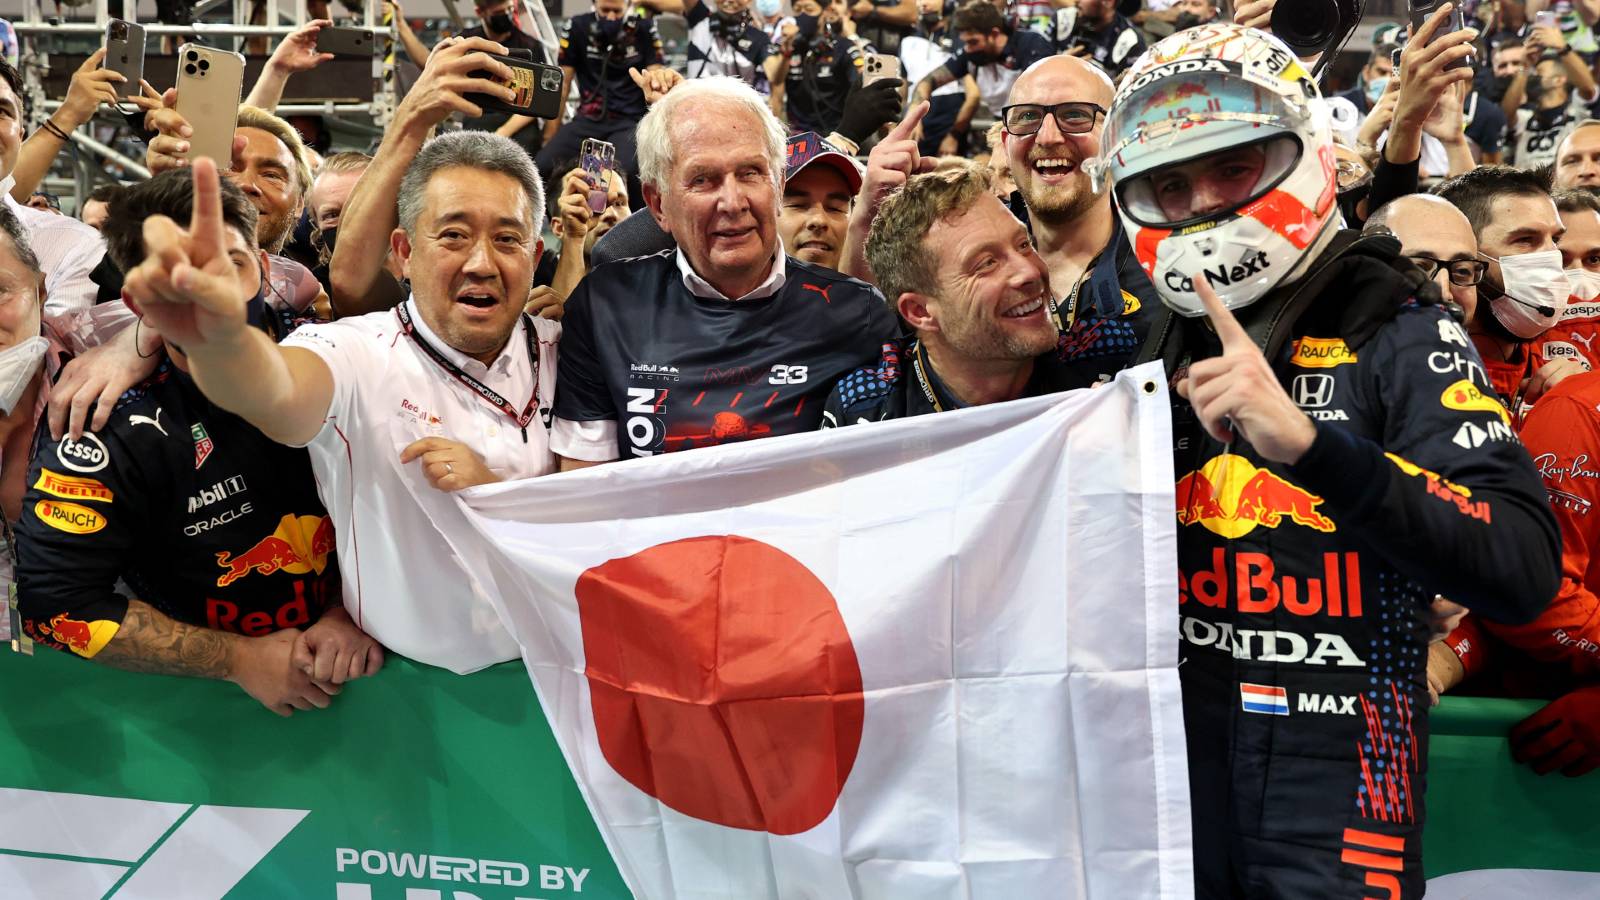 Red Bull and Honda personnel celebrate winning the World Championship. Abu Dhabi December 2021.